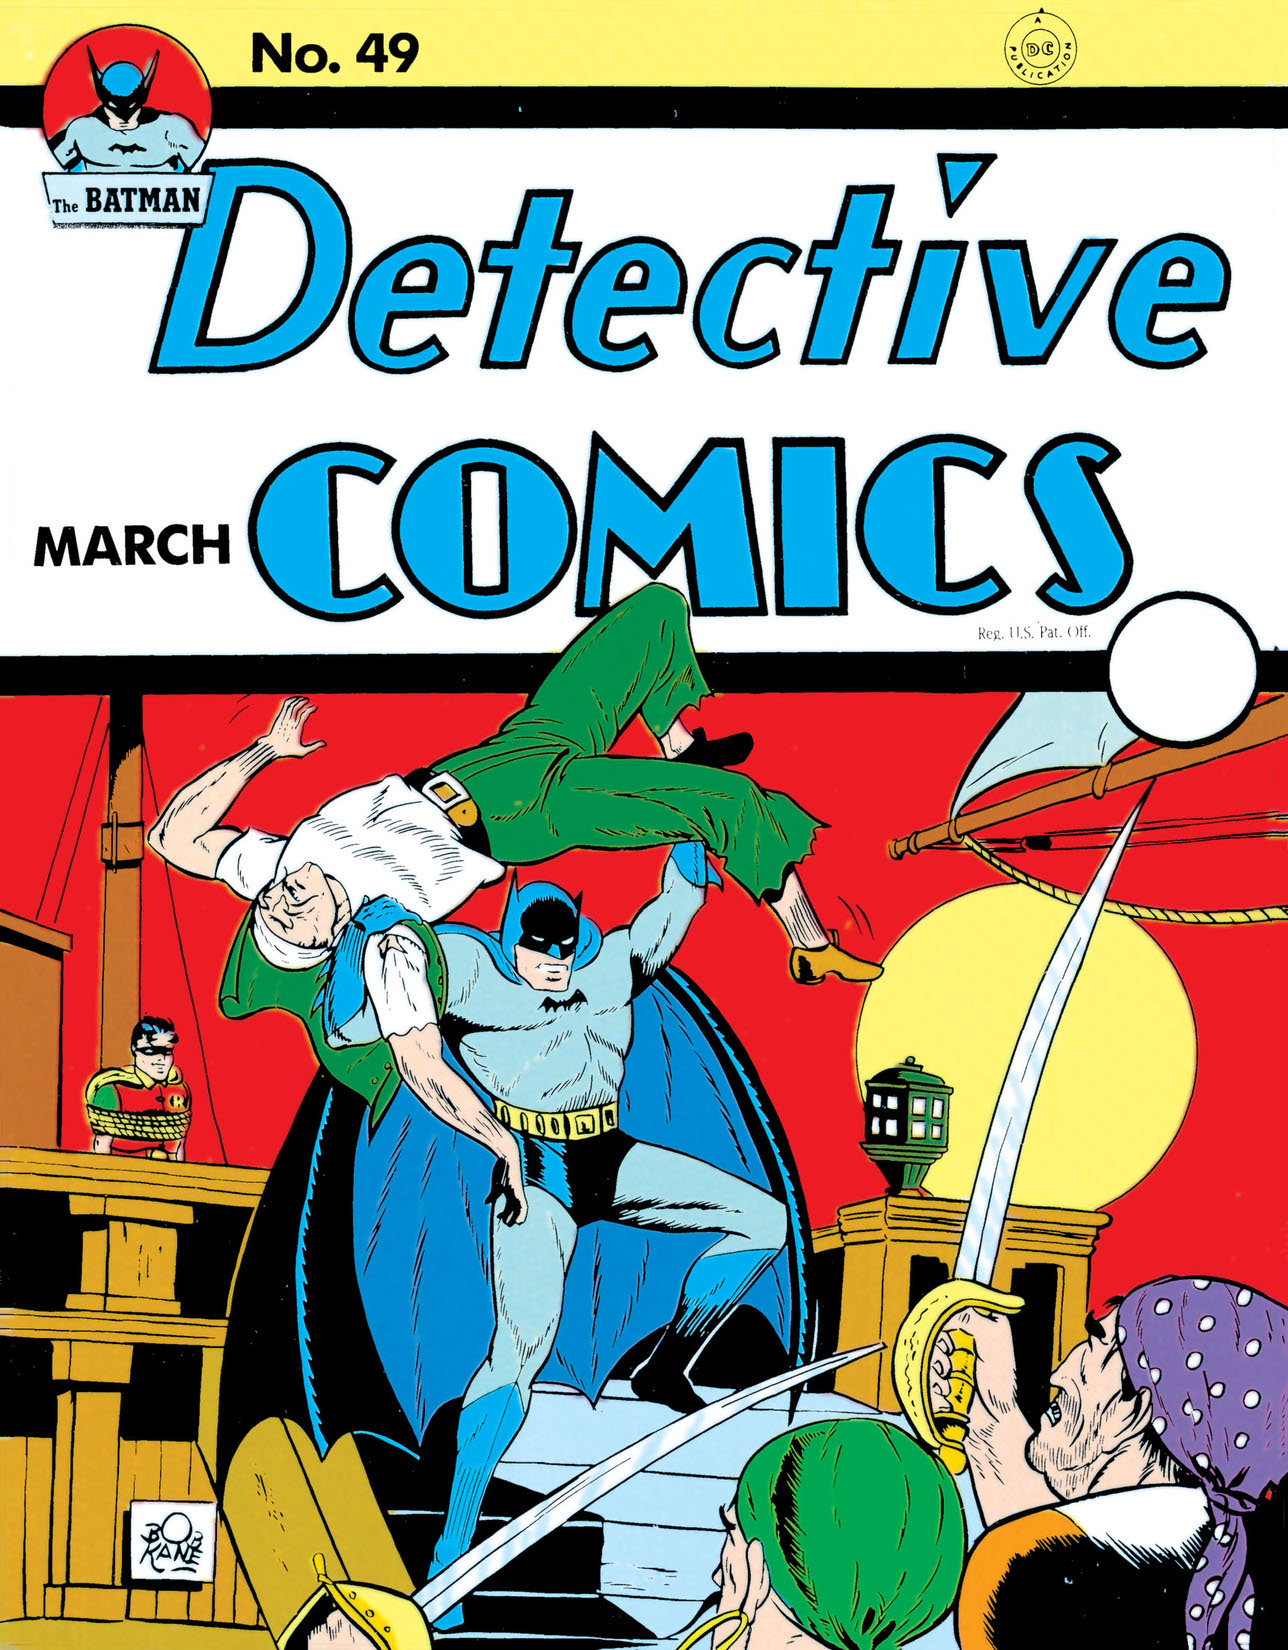 Detective Comics (1937-) #49 preview images